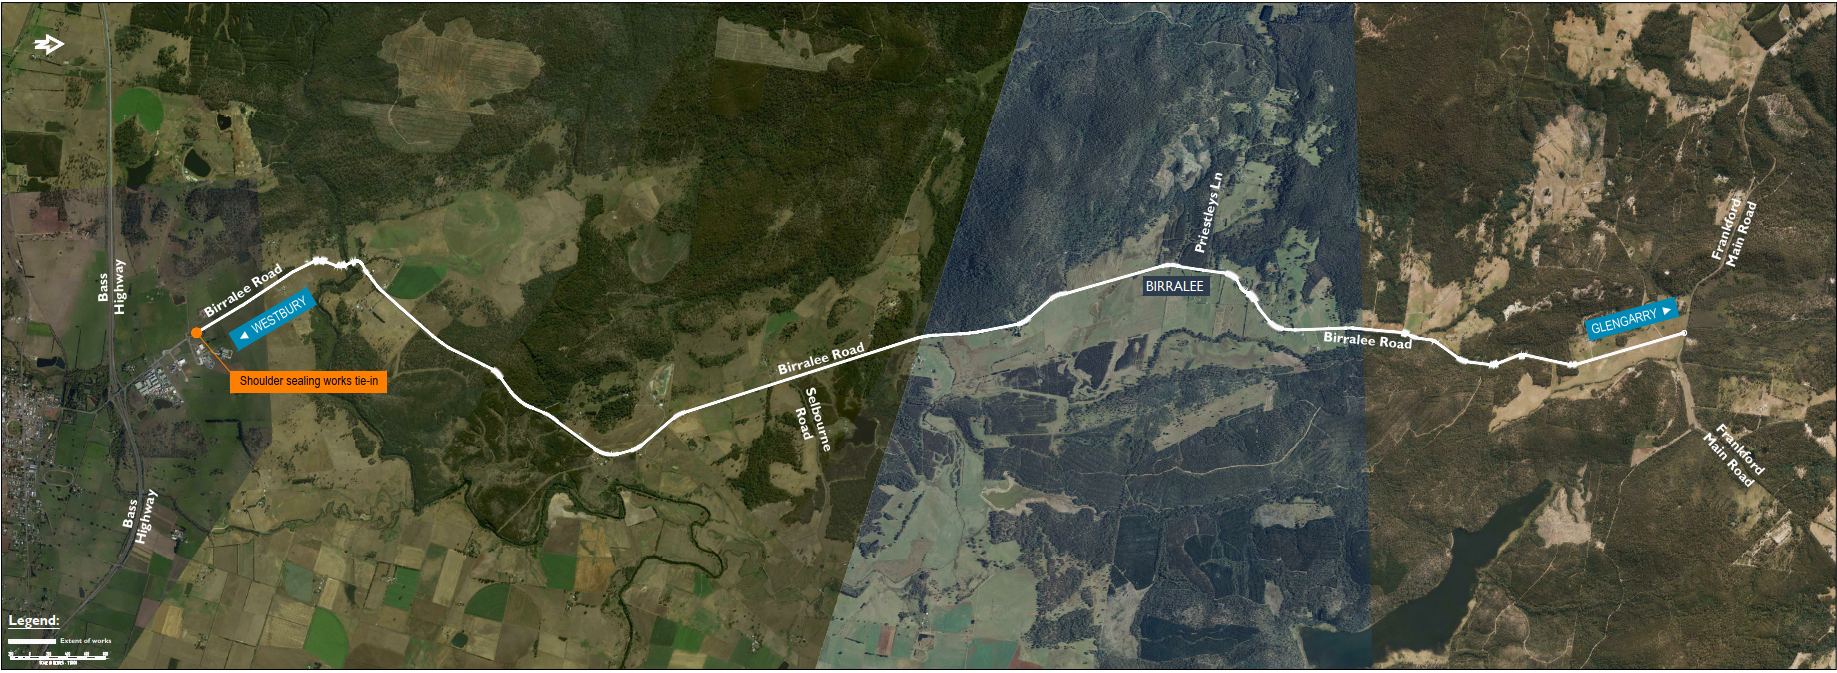 Aerial map of Birralee Road